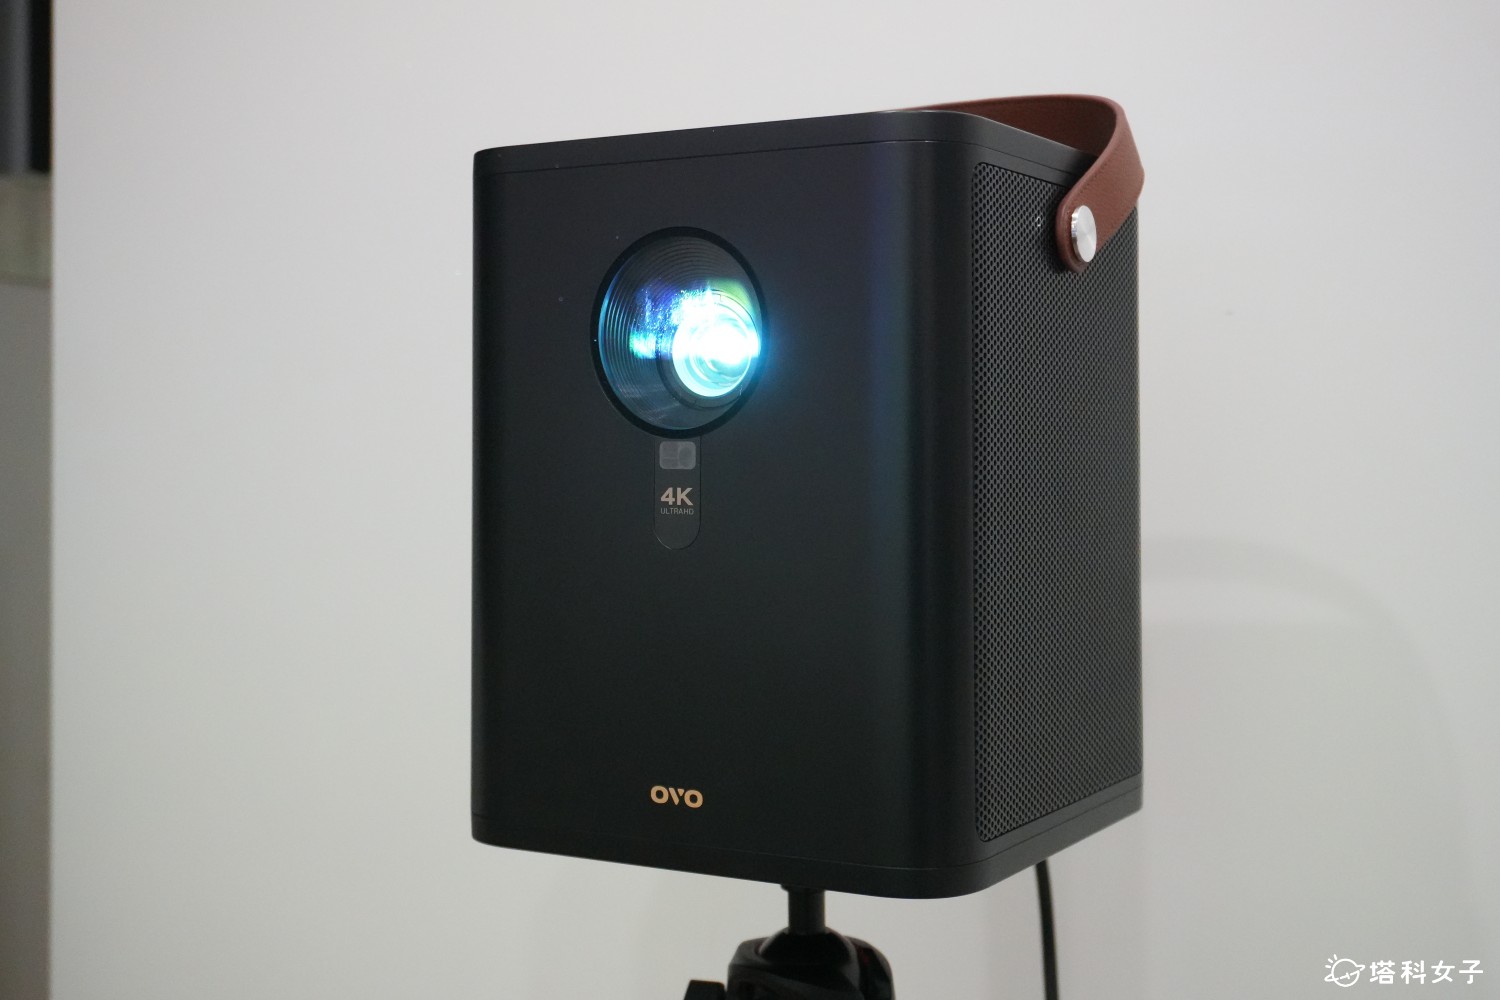  OVO K9 真 4K 投影機靜音高效散熱